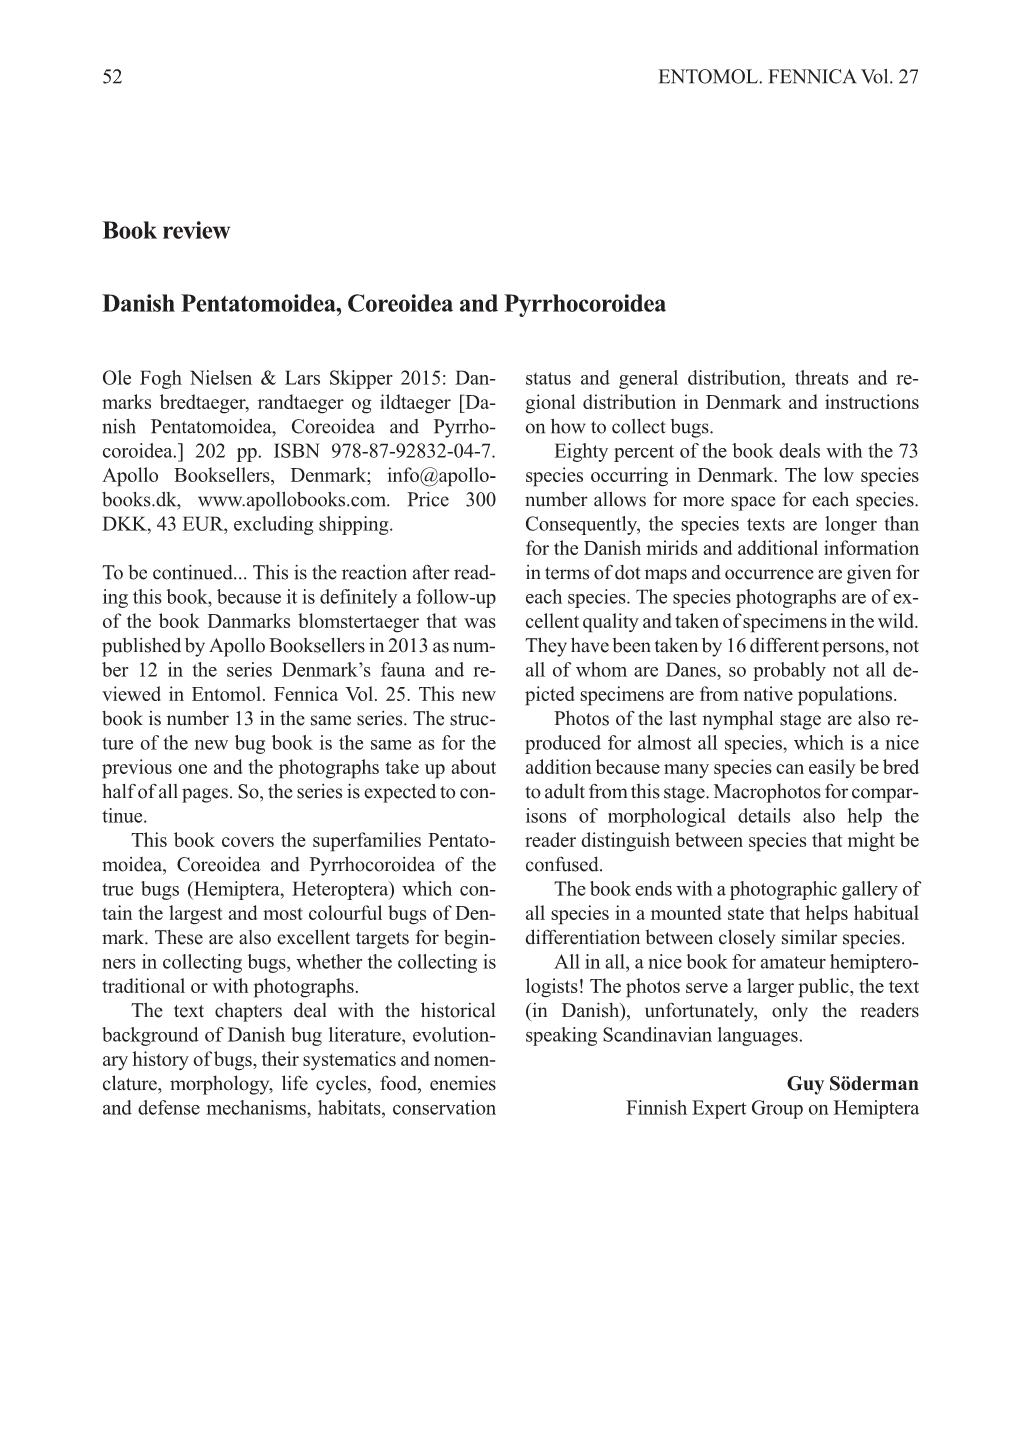 Book Review Danish Pentatomoidea, Coreoidea and Pyrrhocoroidea